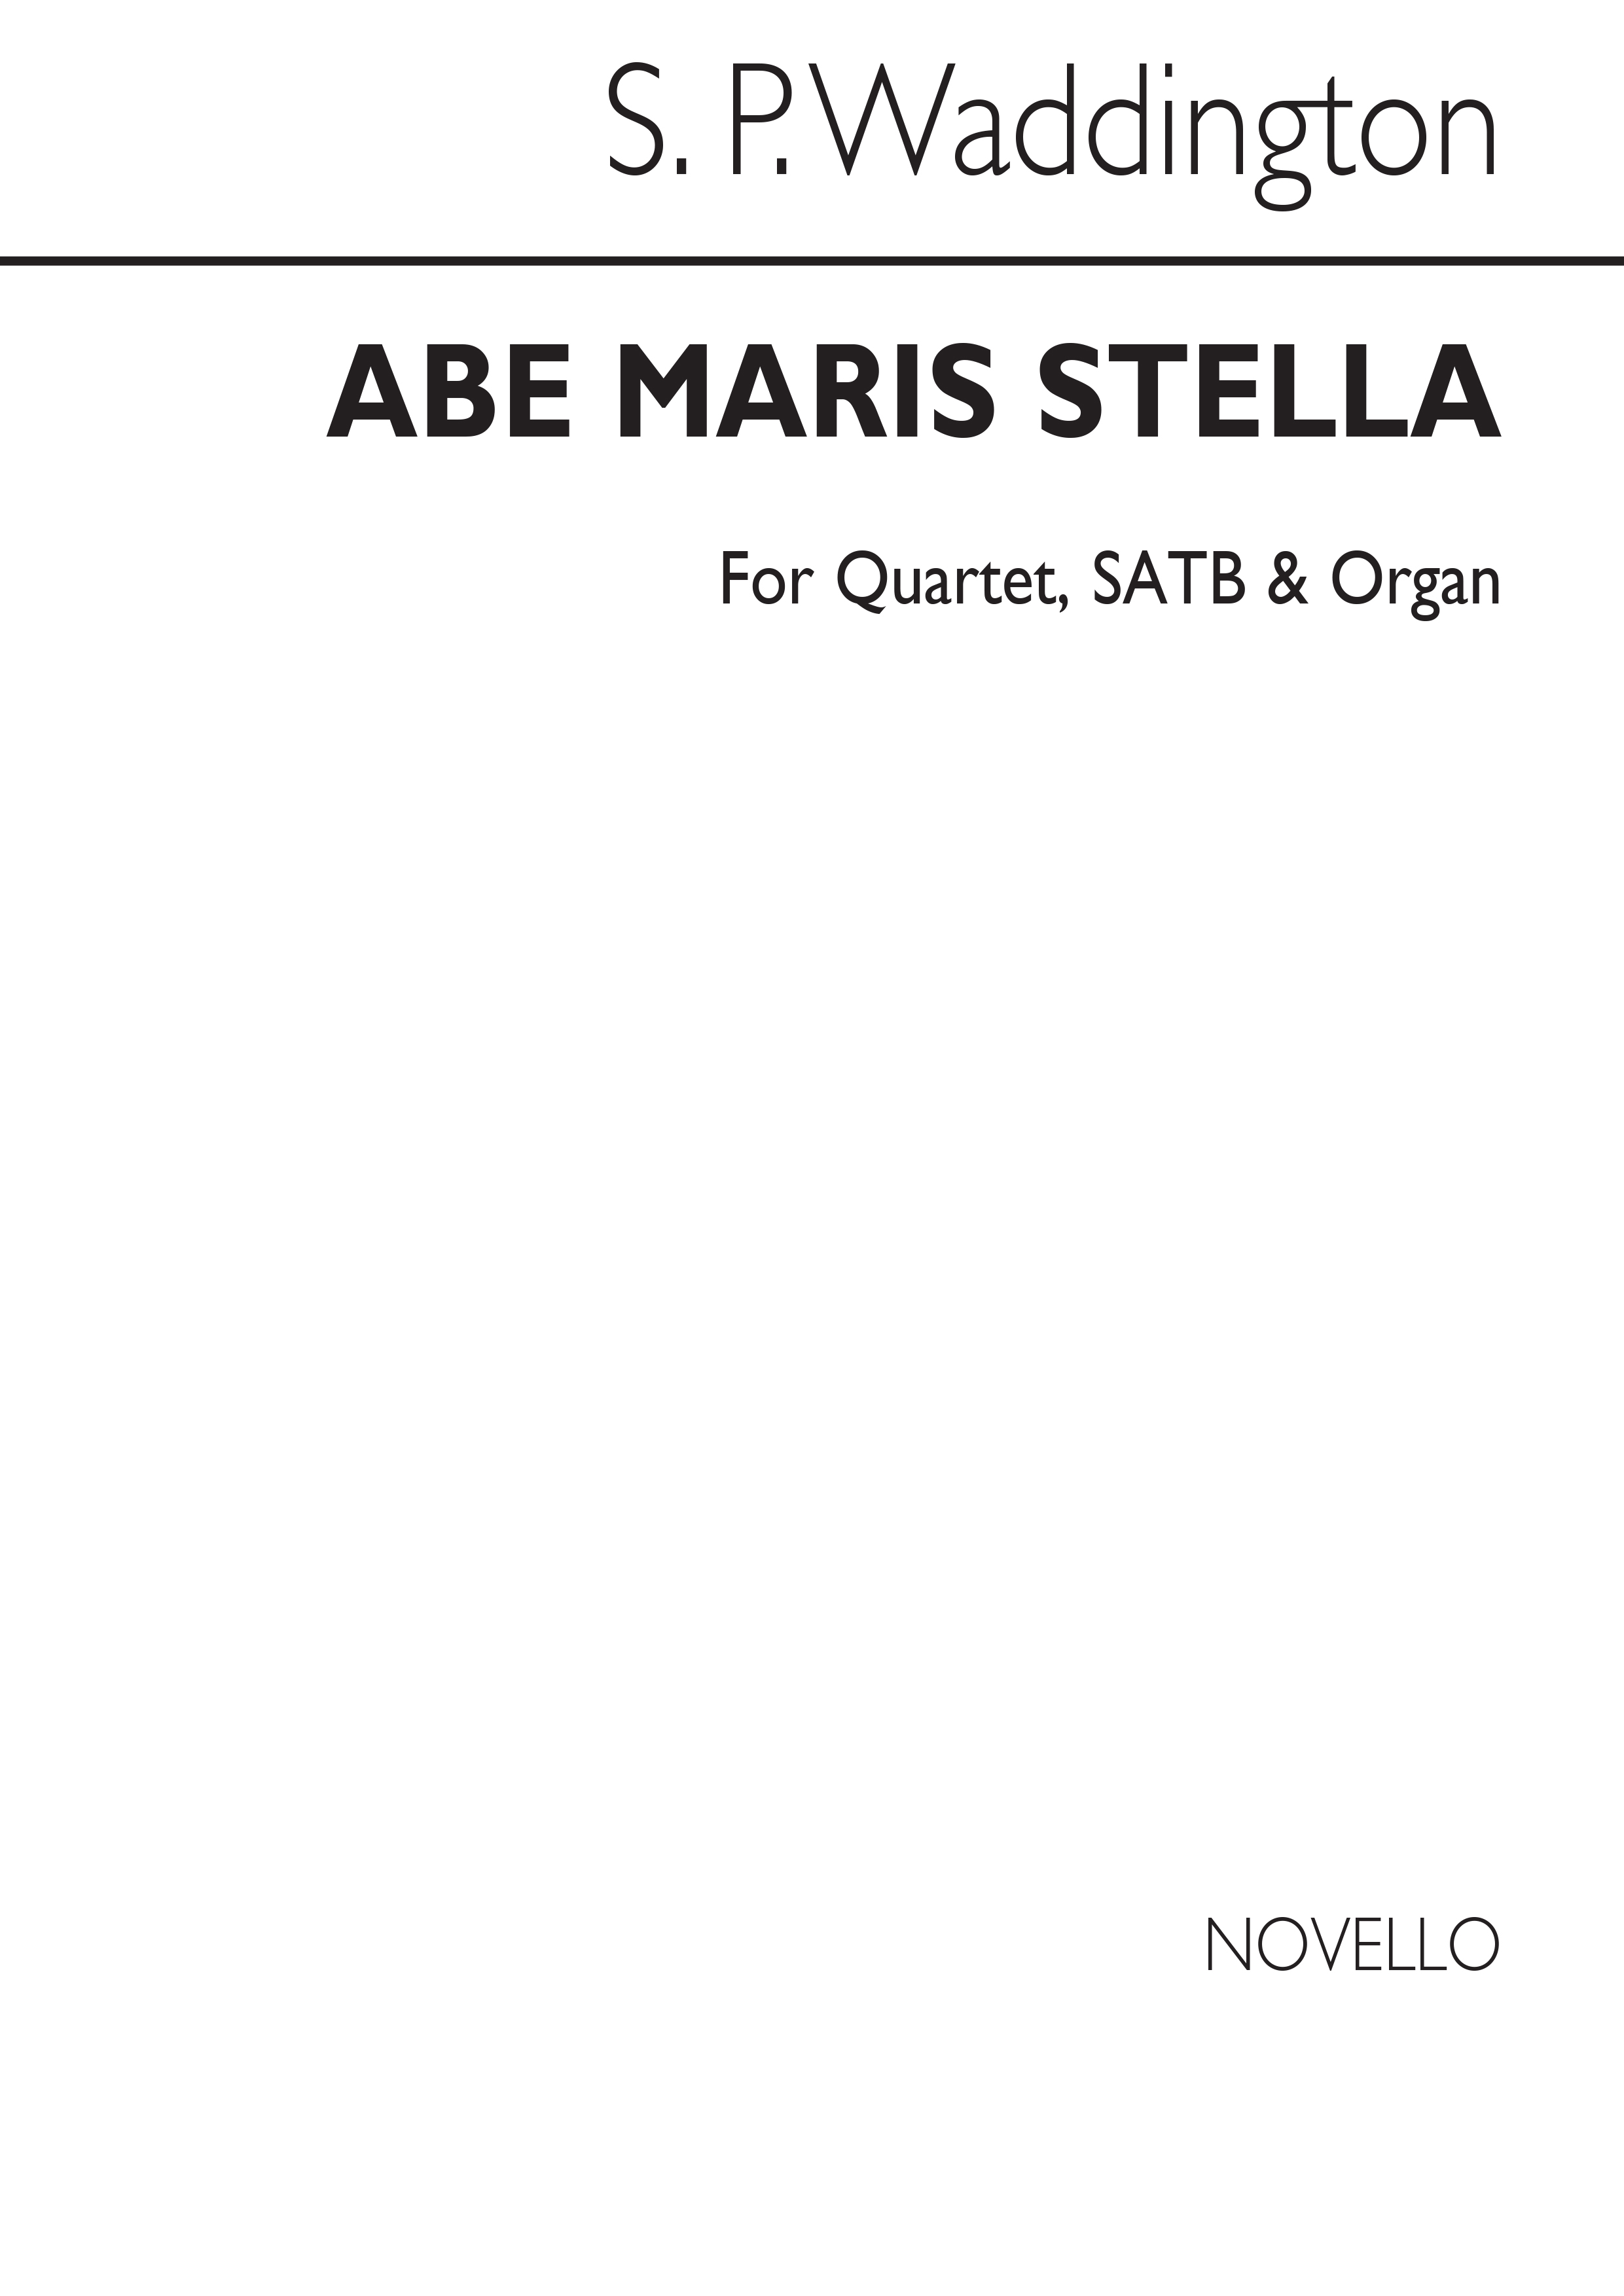 Waddington, Sp Ave Maris Stella Satb Quartet/Satb Chorus/Organ